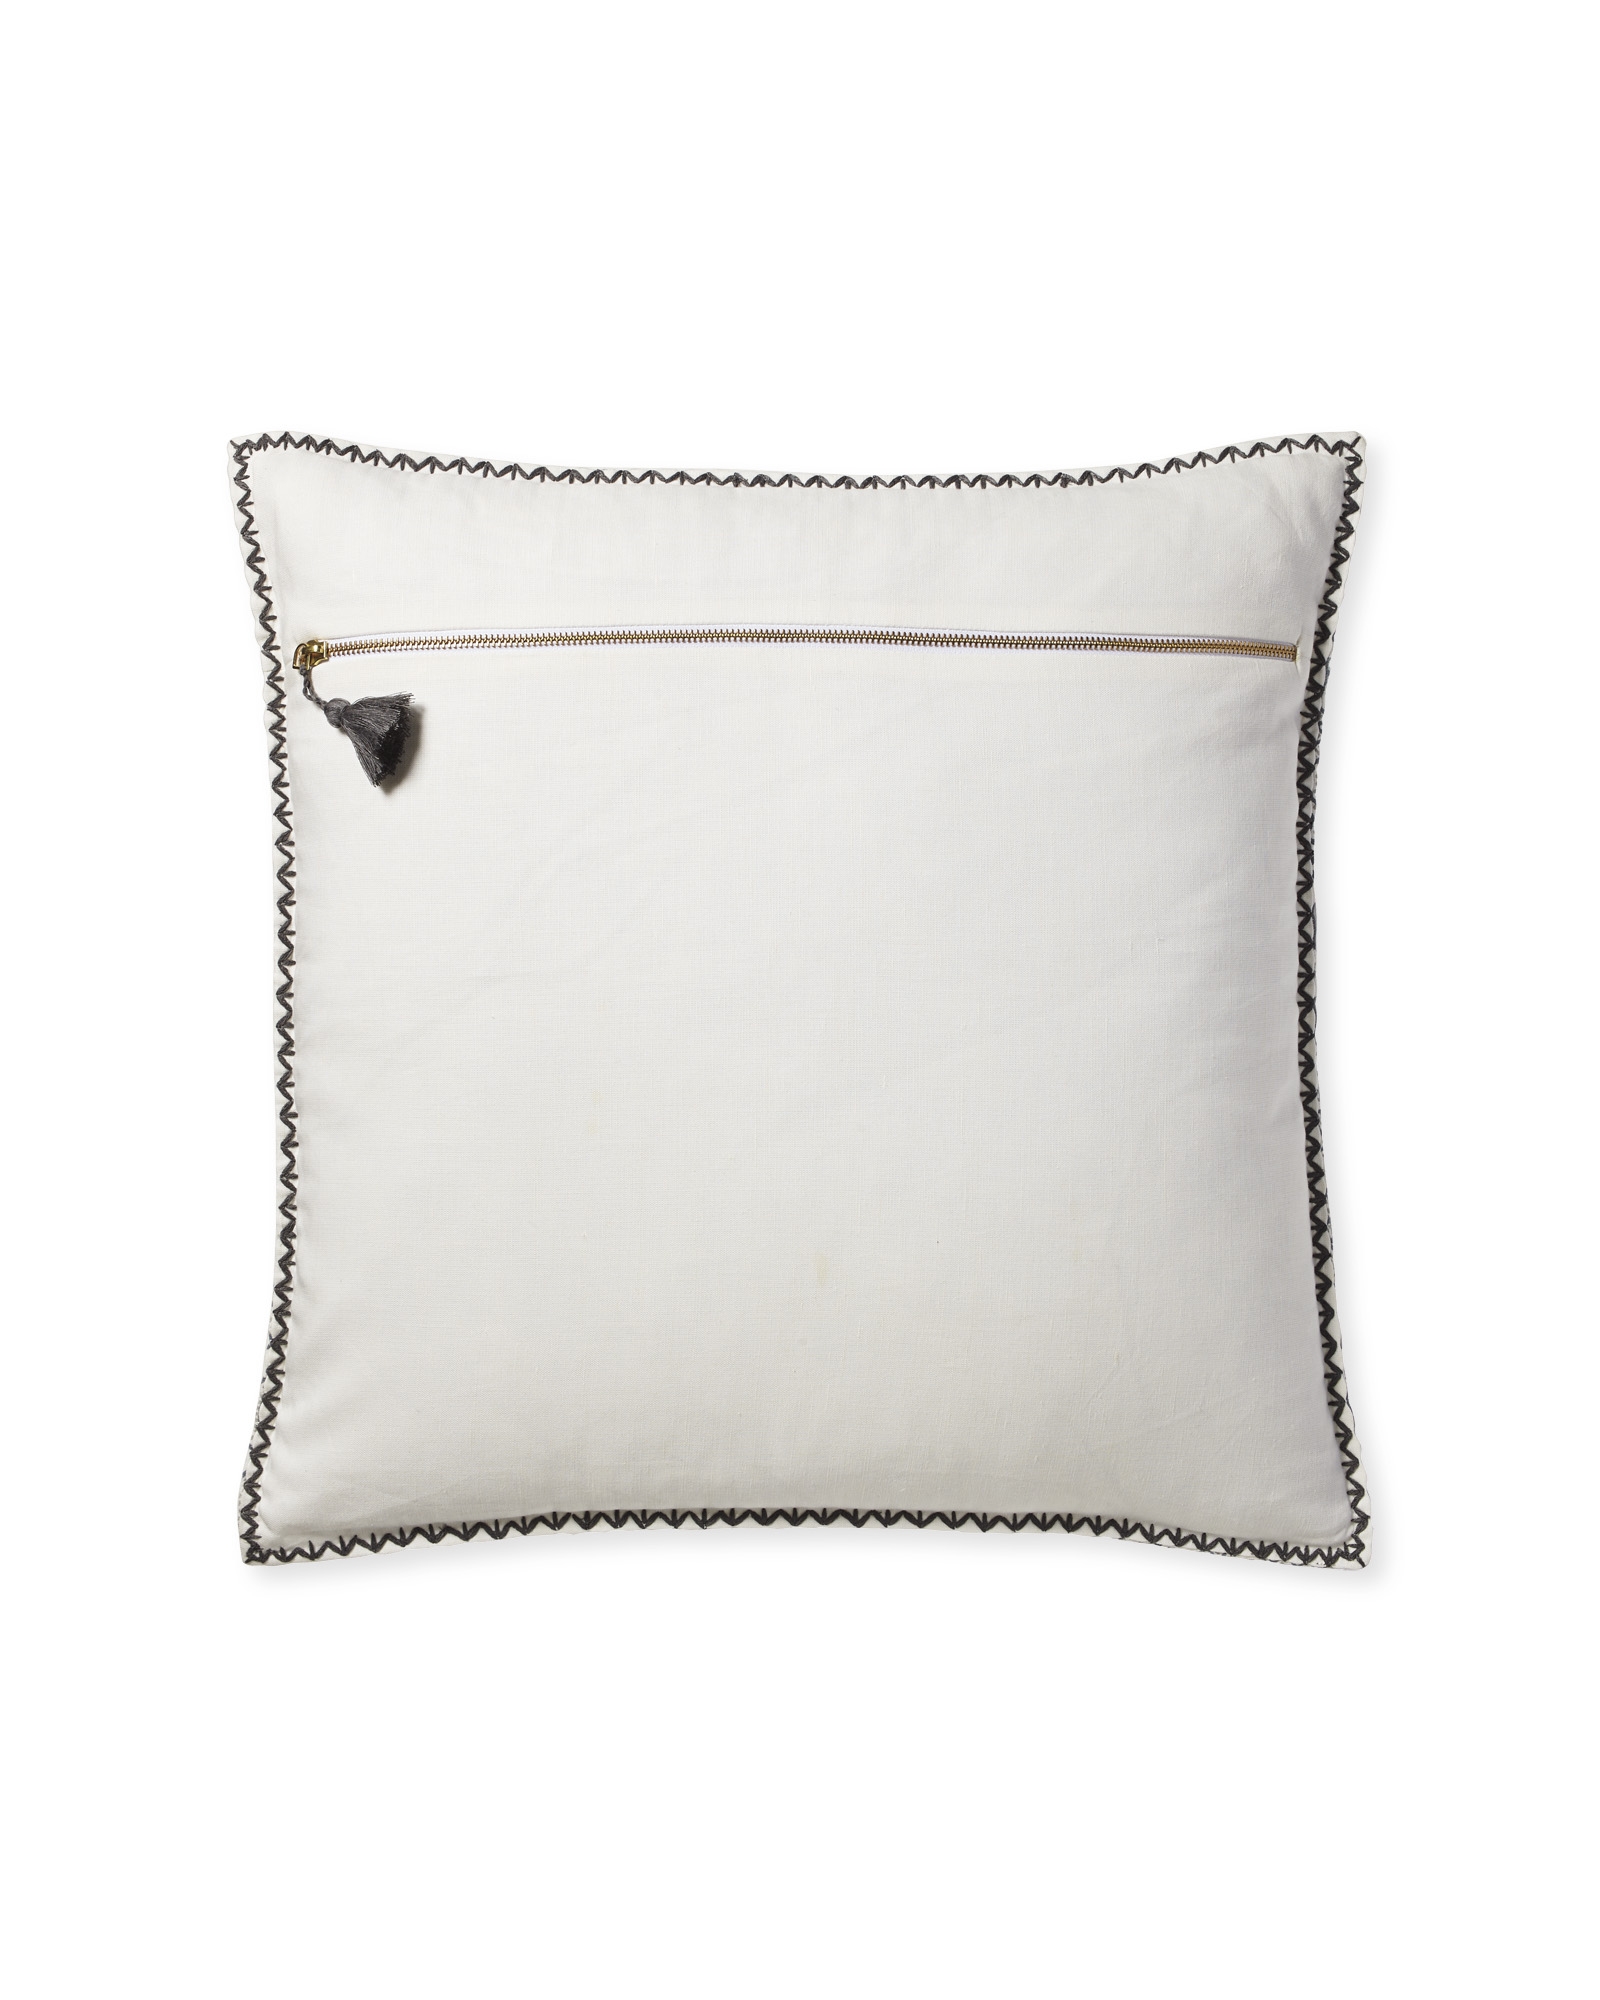 Jamesport 20" SQ Pillow Cover - Fog - Insert sold separately - Image 1